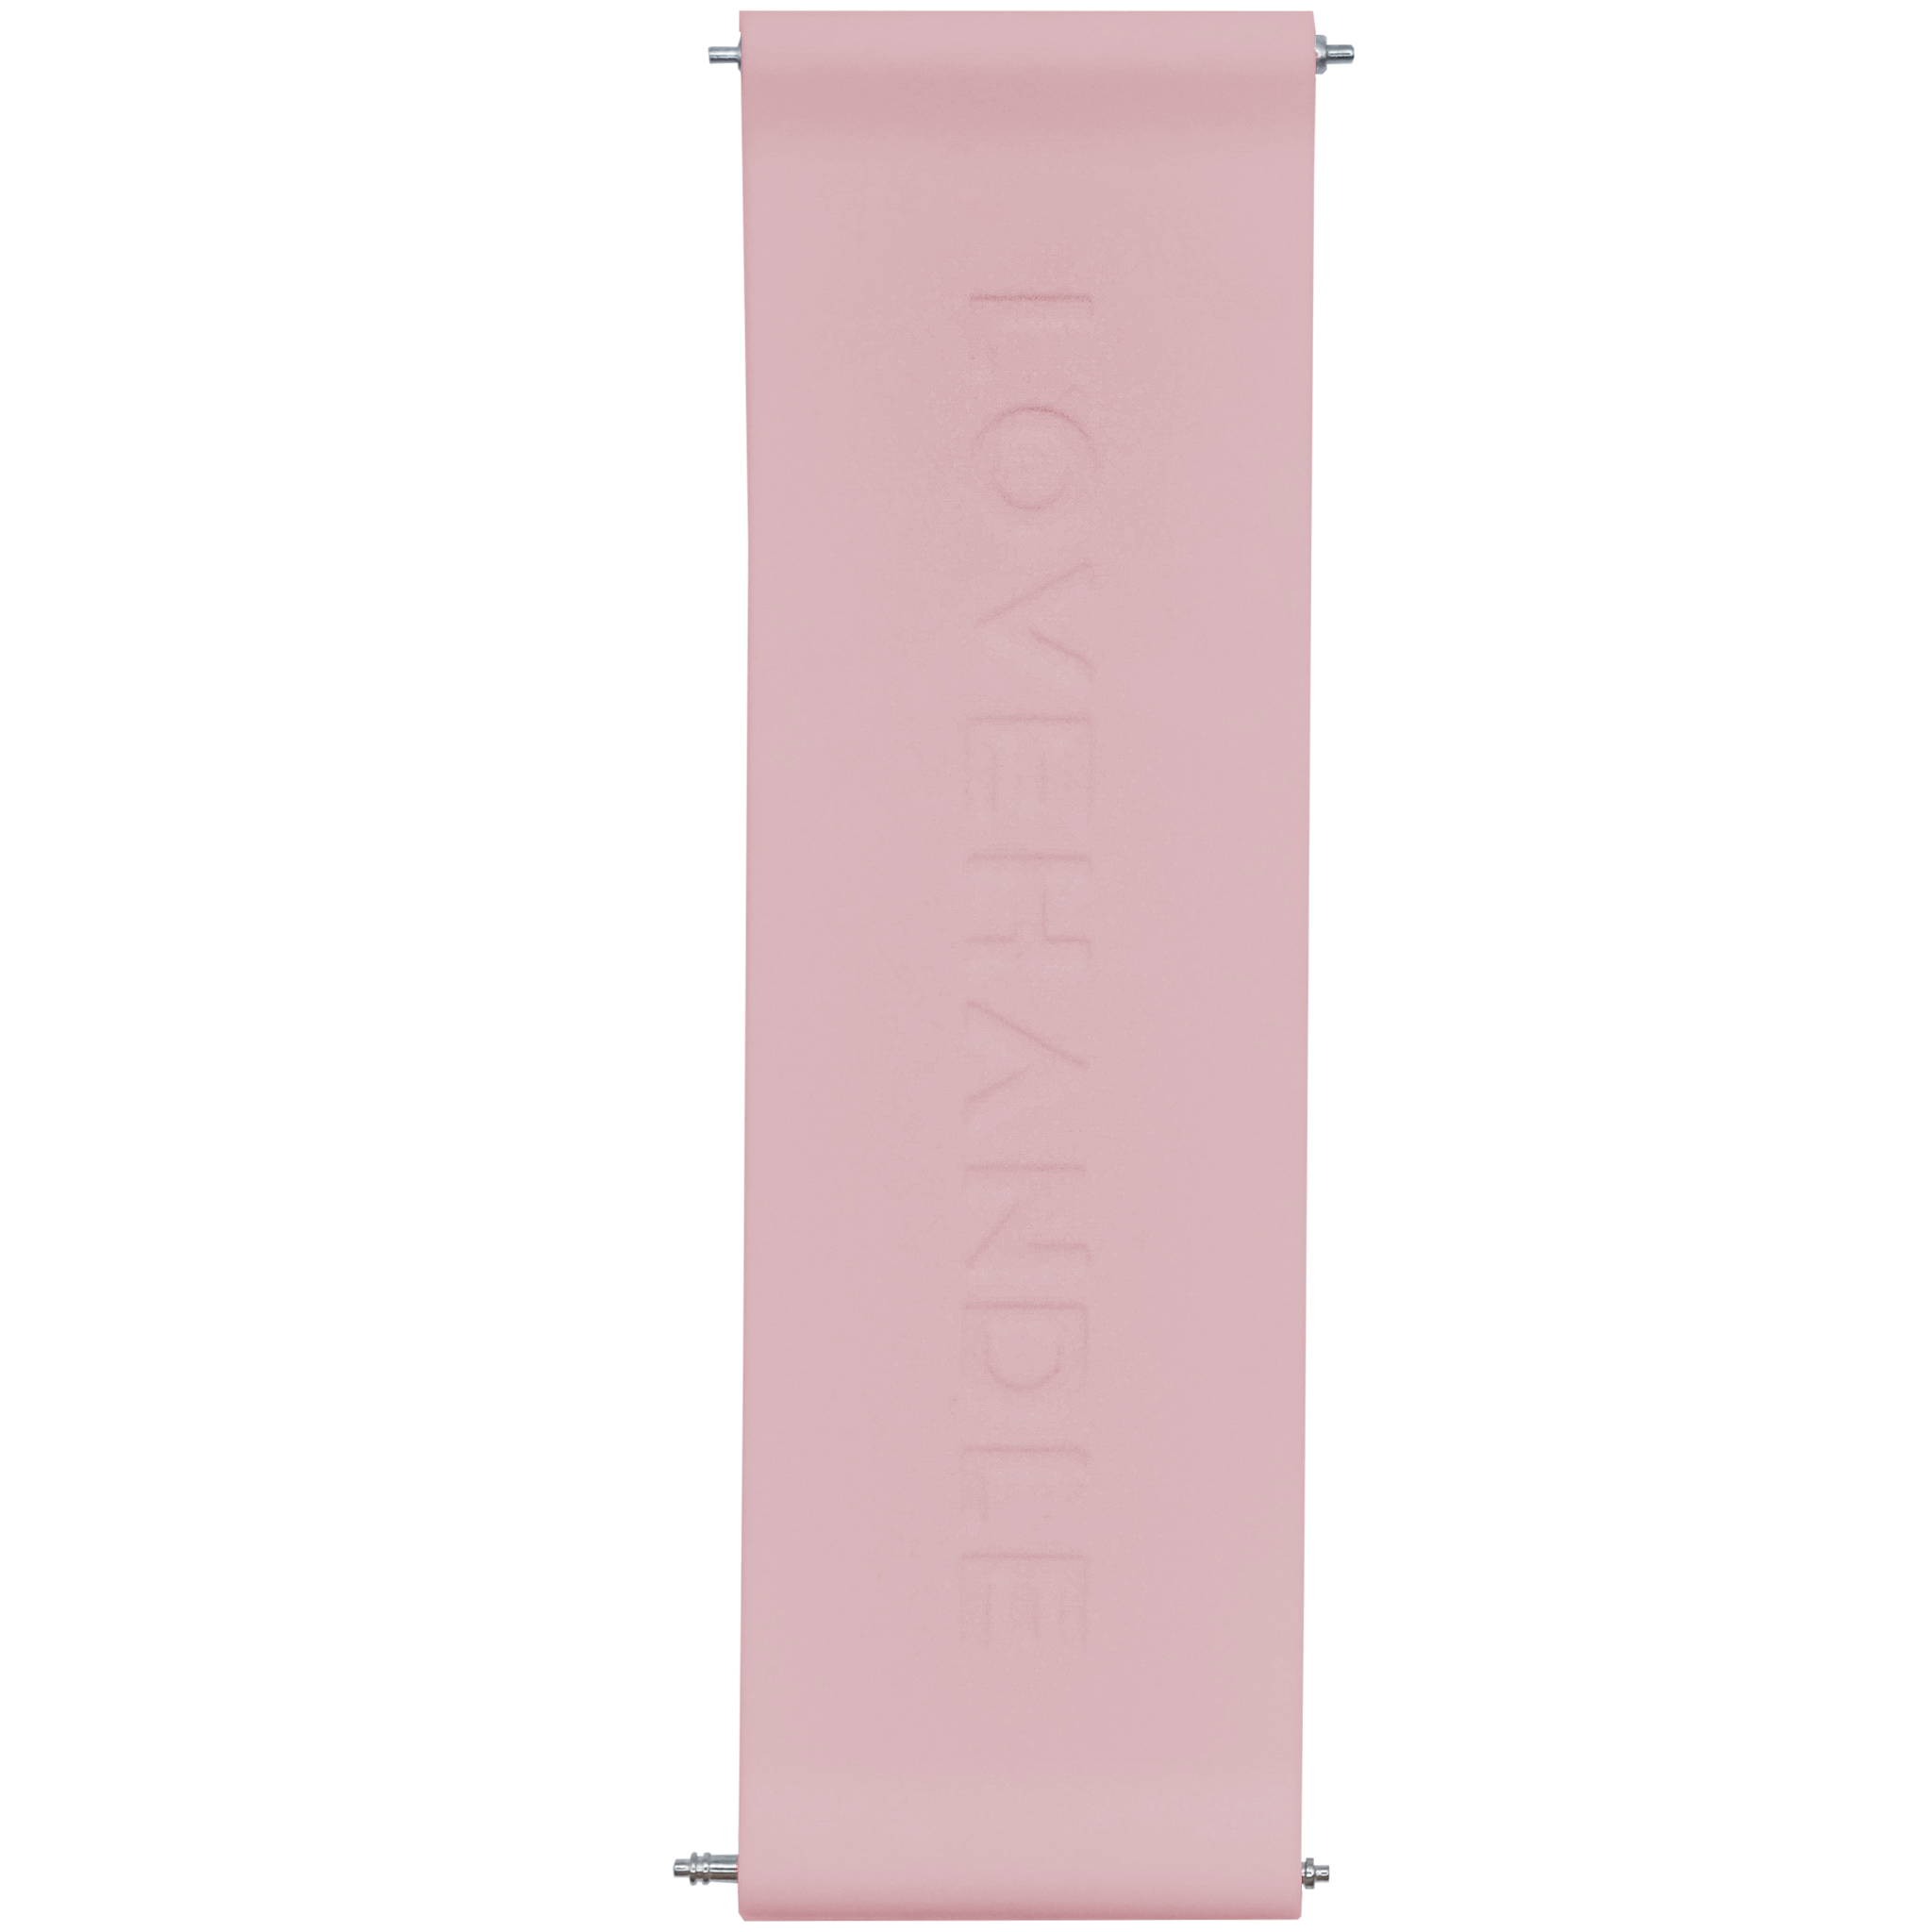 PRO Strap - Light Pink